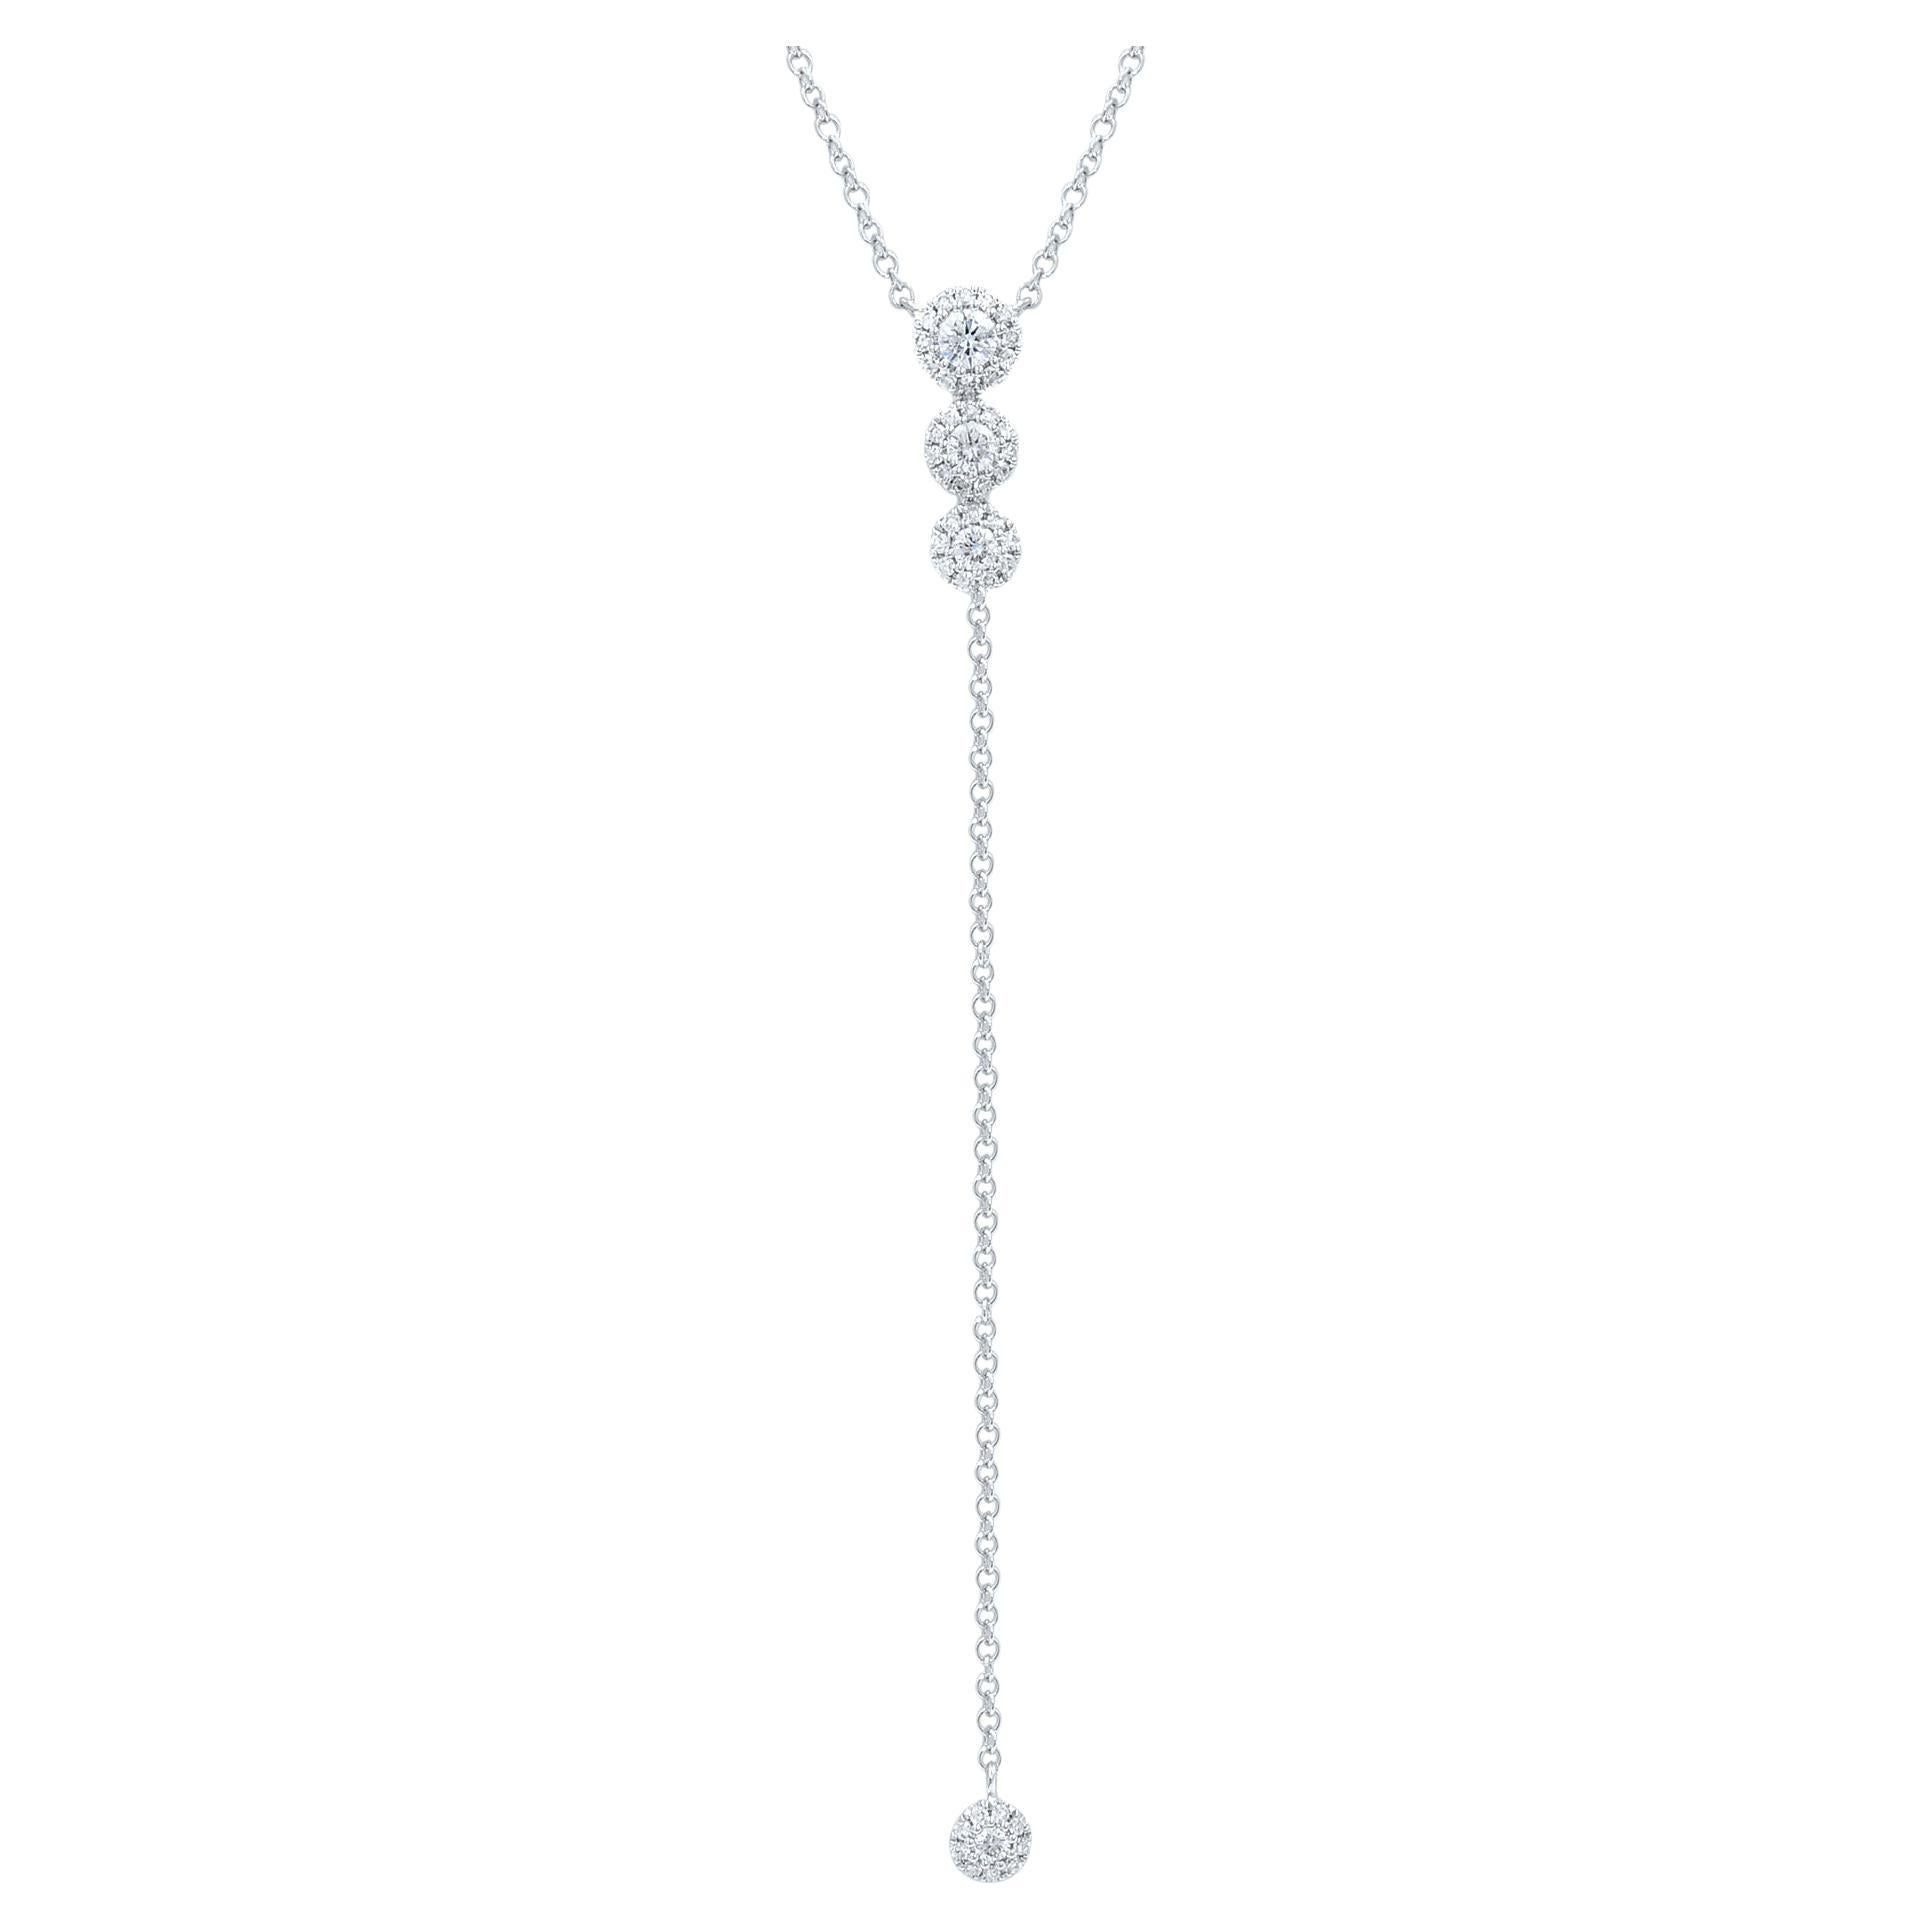 Rachel Koen Diamond Composite Lariat Necklace 14k White Gold 0.29cttw